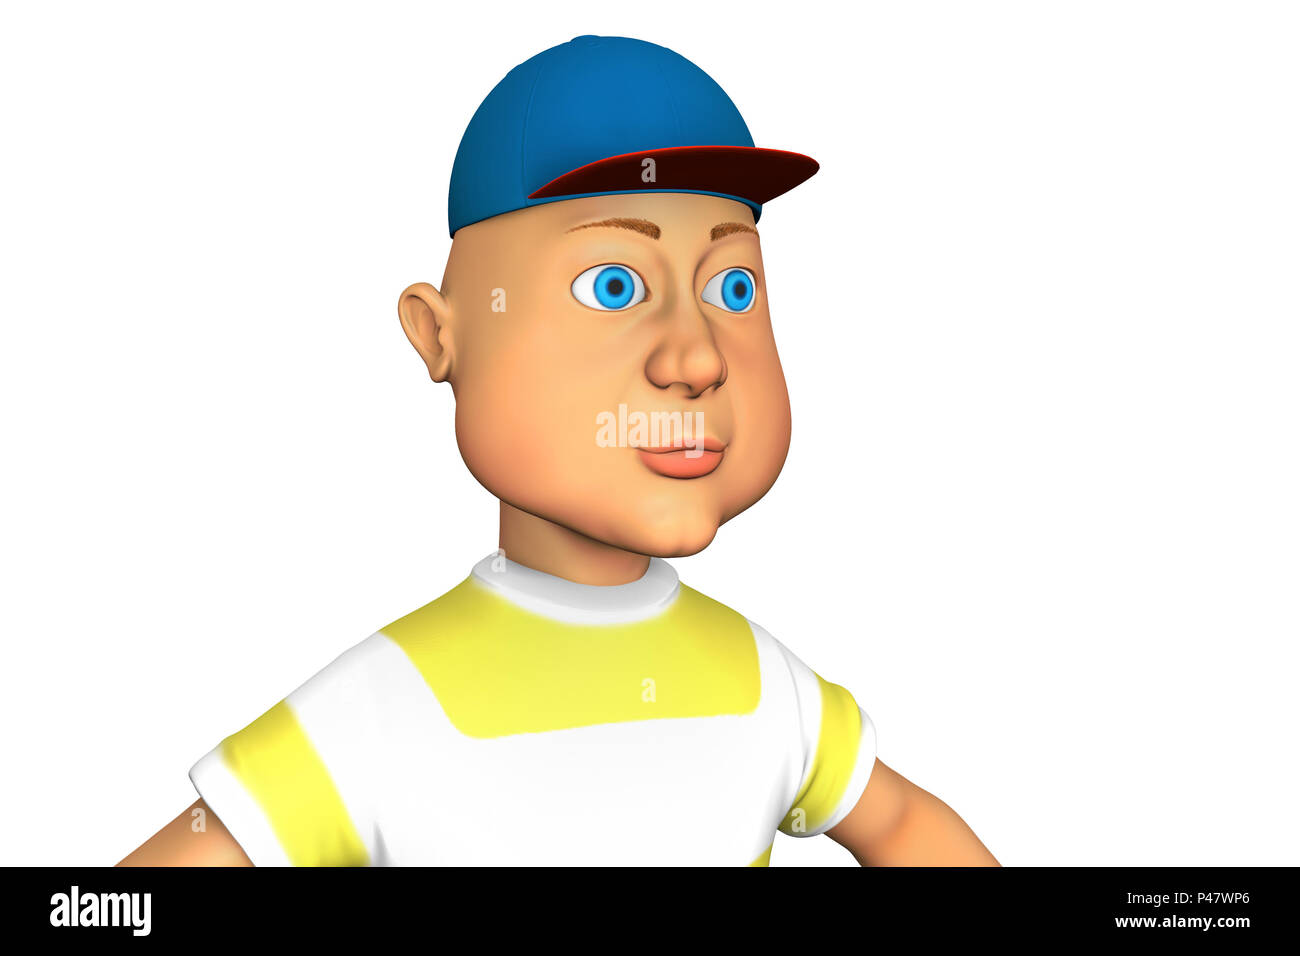 Funny Man in the baseball cap, 3d rendering cartoon illustration Stock